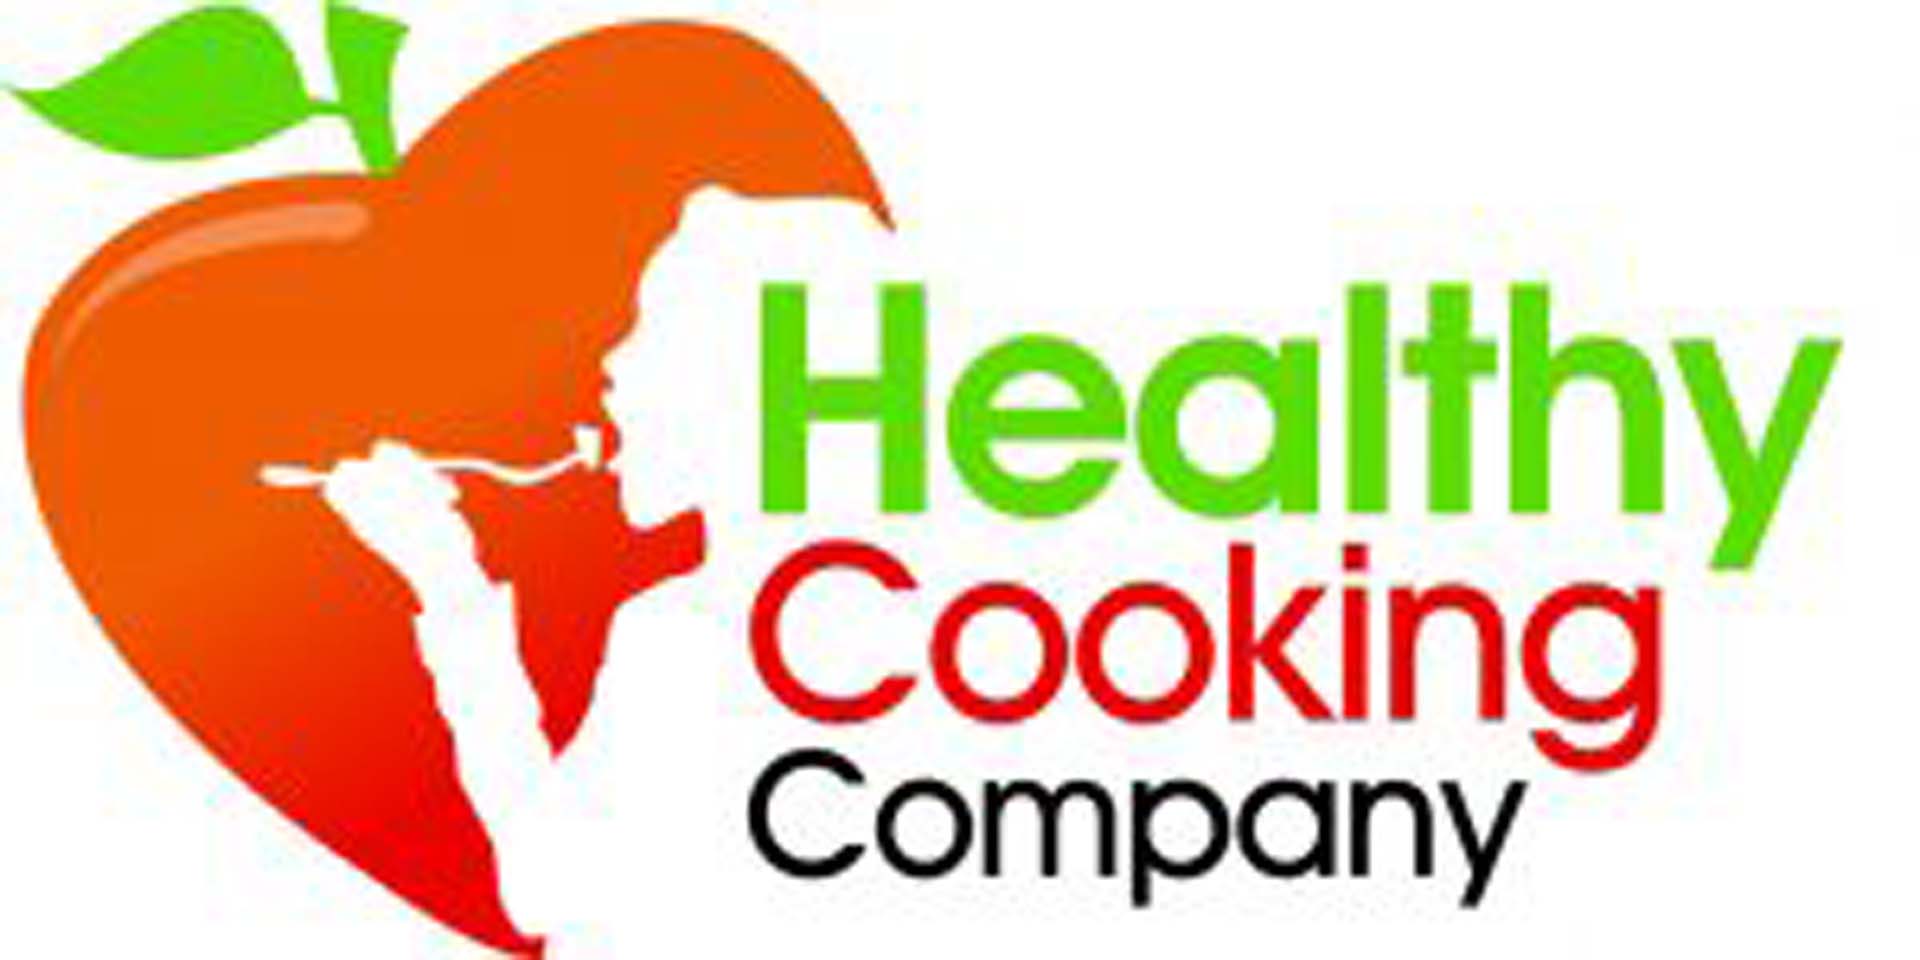 Healthy Cooking Company Pty Ltd_Final_23082012 copy